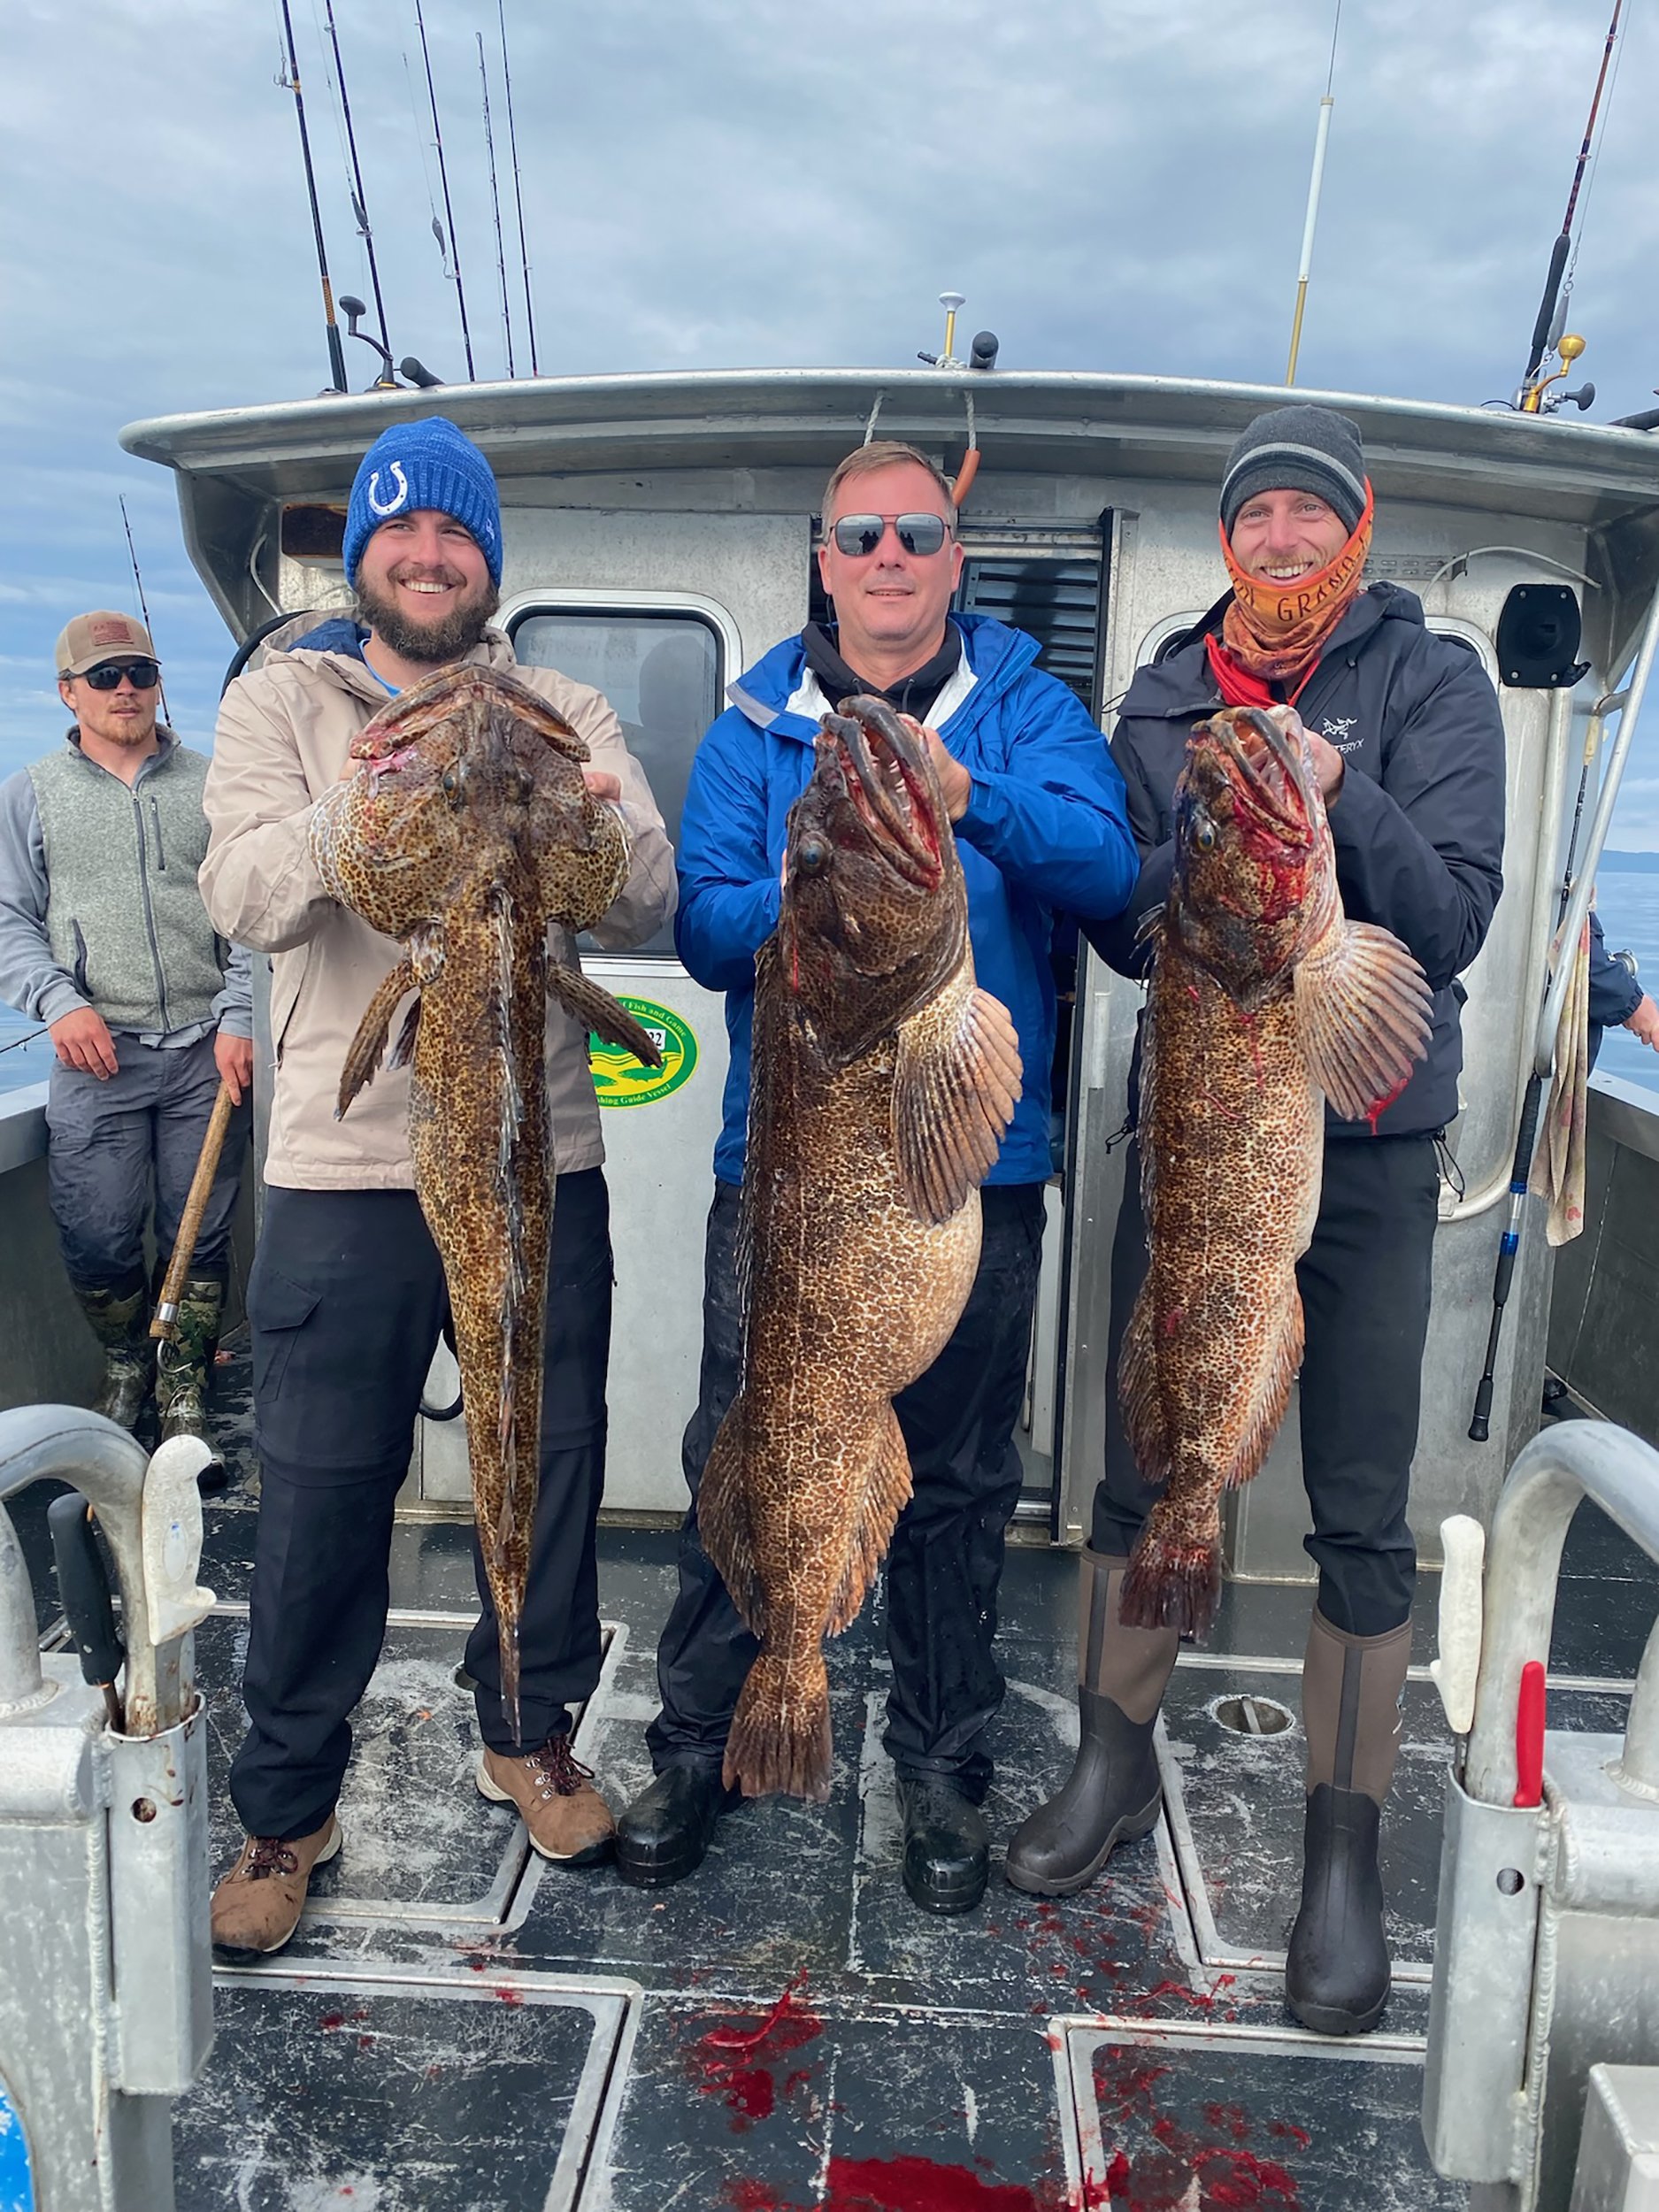 Brothers fishing trip in Alaska